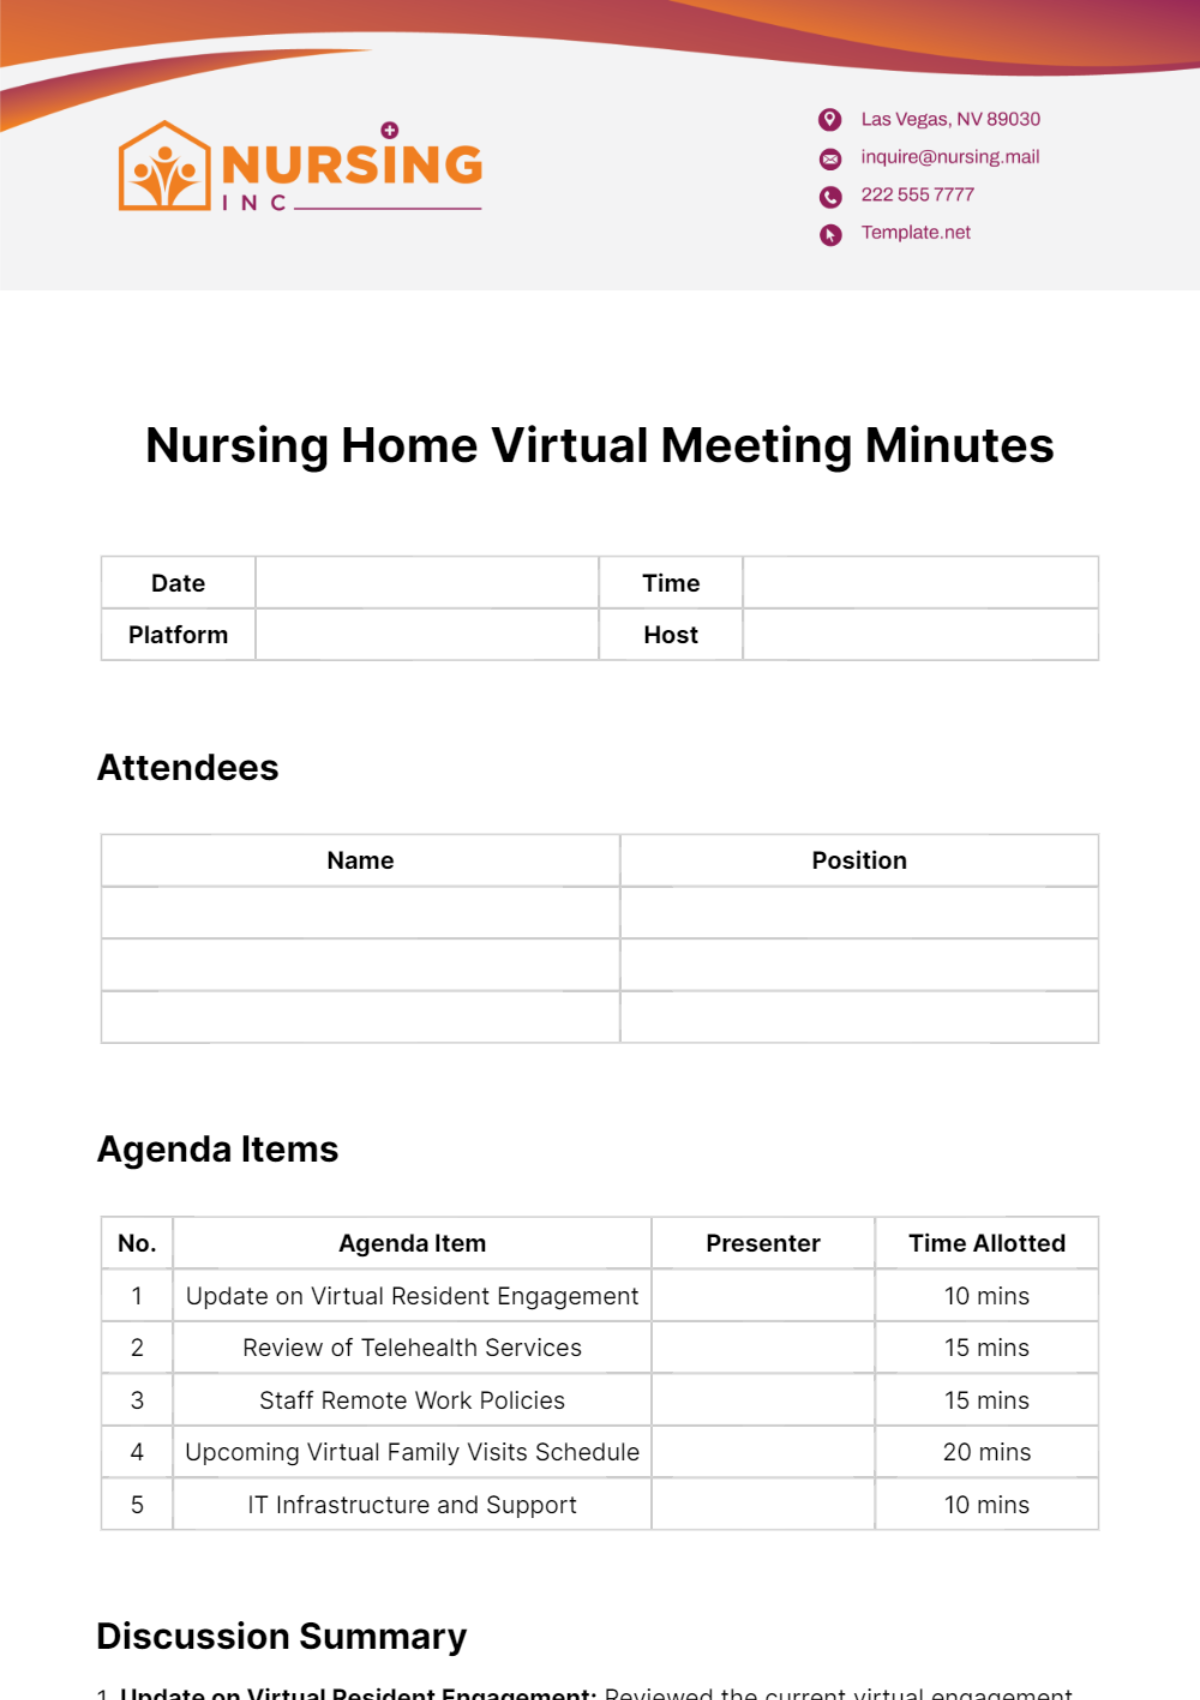 Nursing Home Virtual Meeting Minutes Template